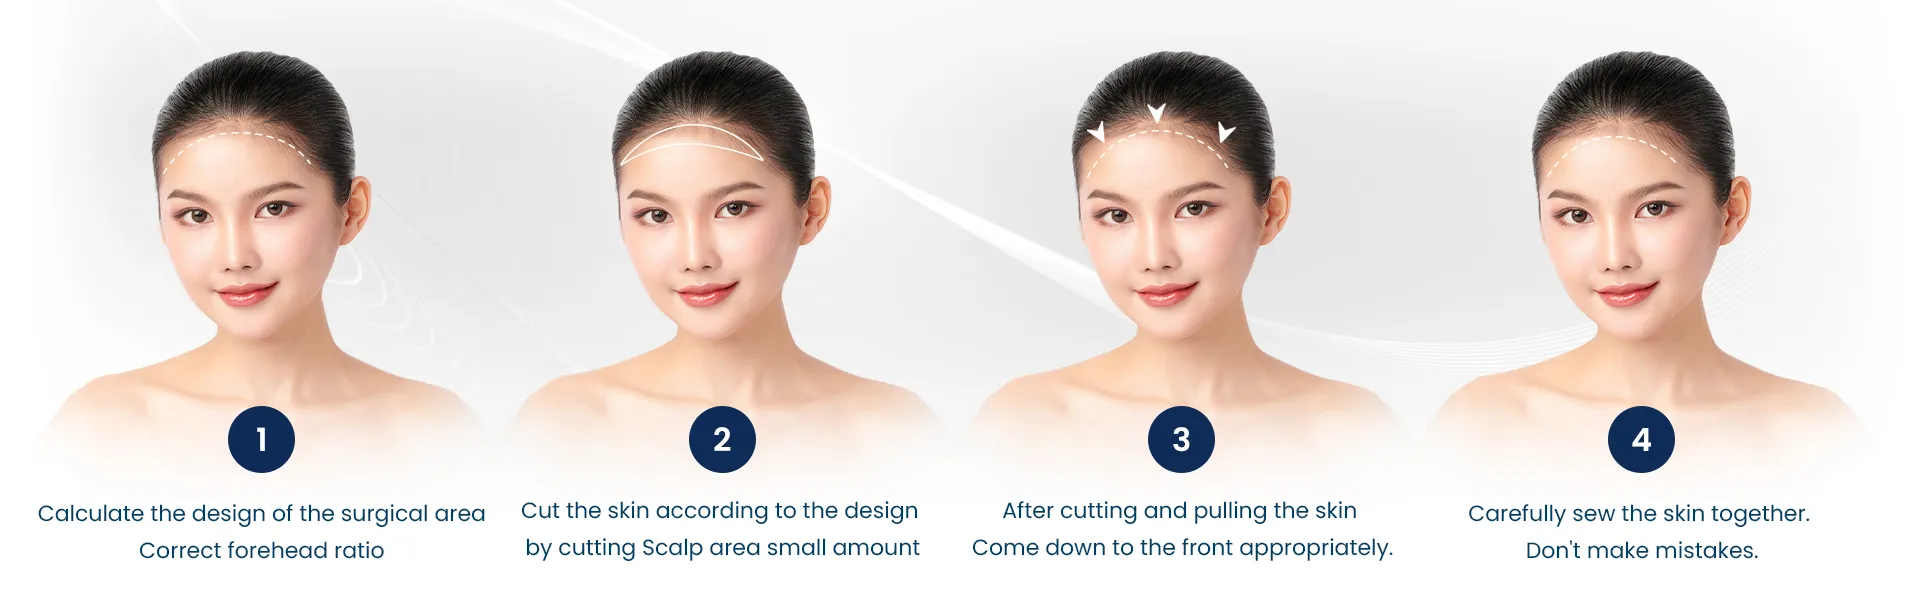 Milada Plastic Surgery Hospital | Forehead Reduction Procedure